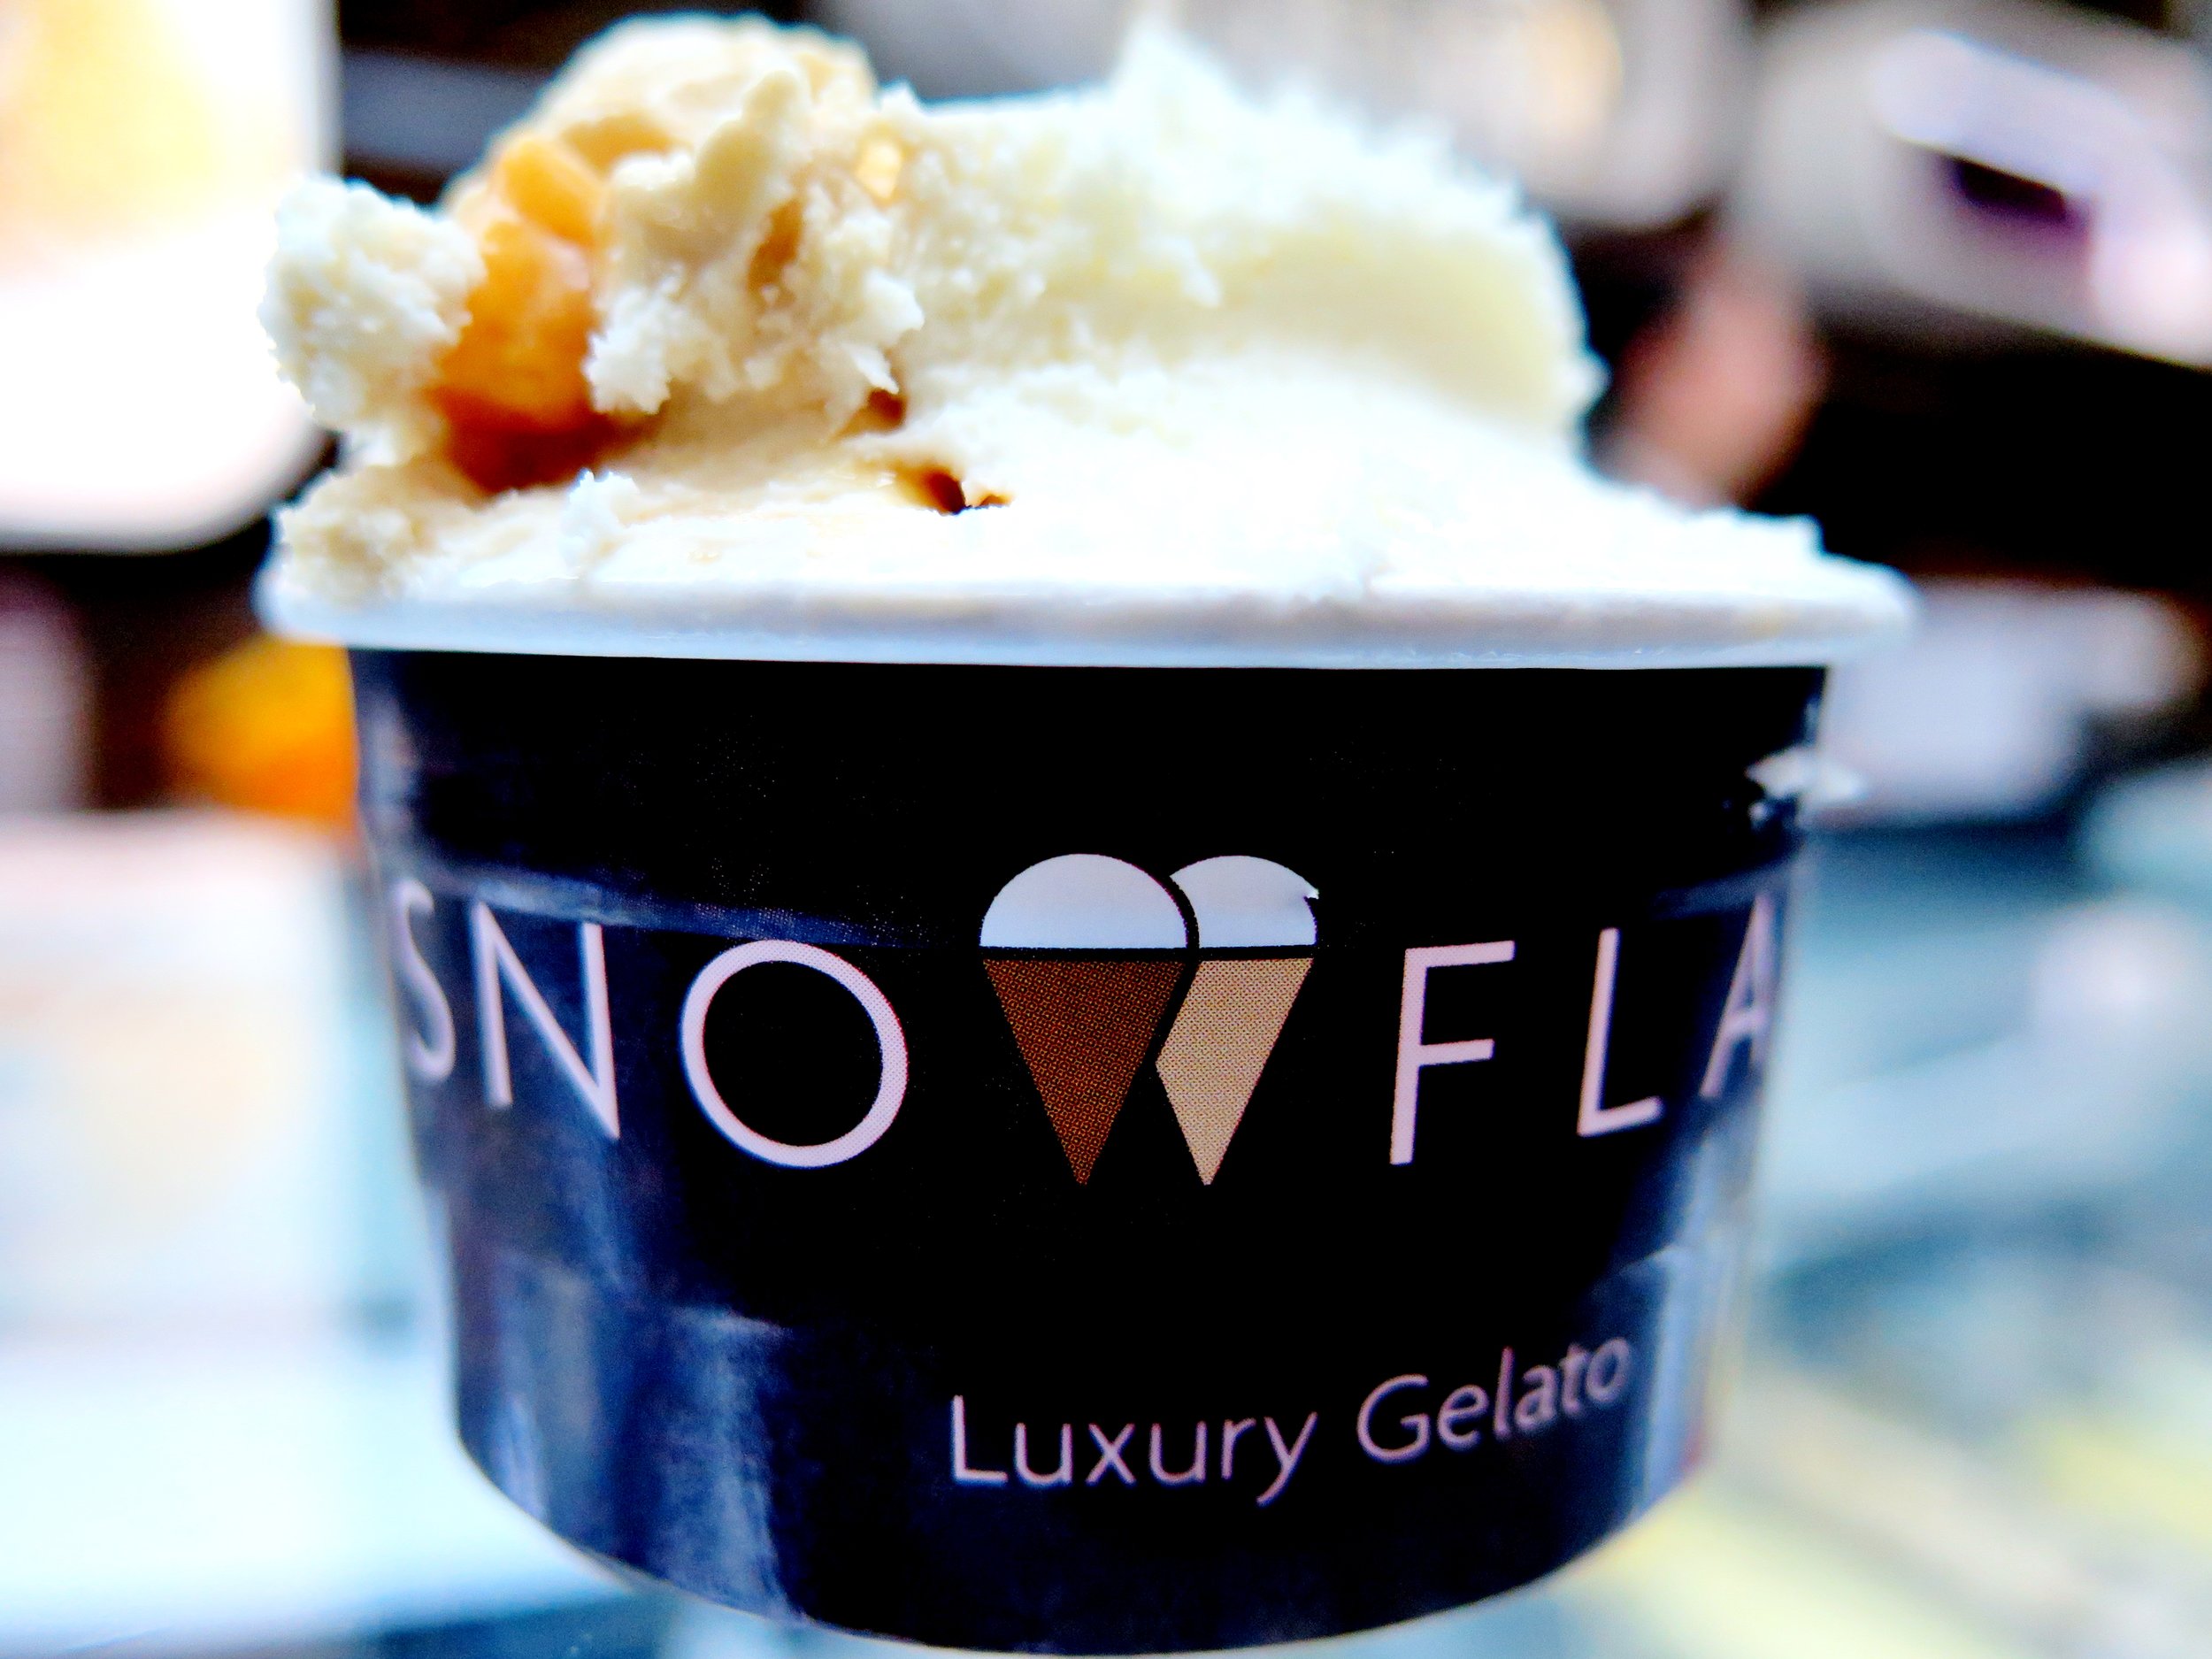 Snowflake Luxury Gelato, London - Review